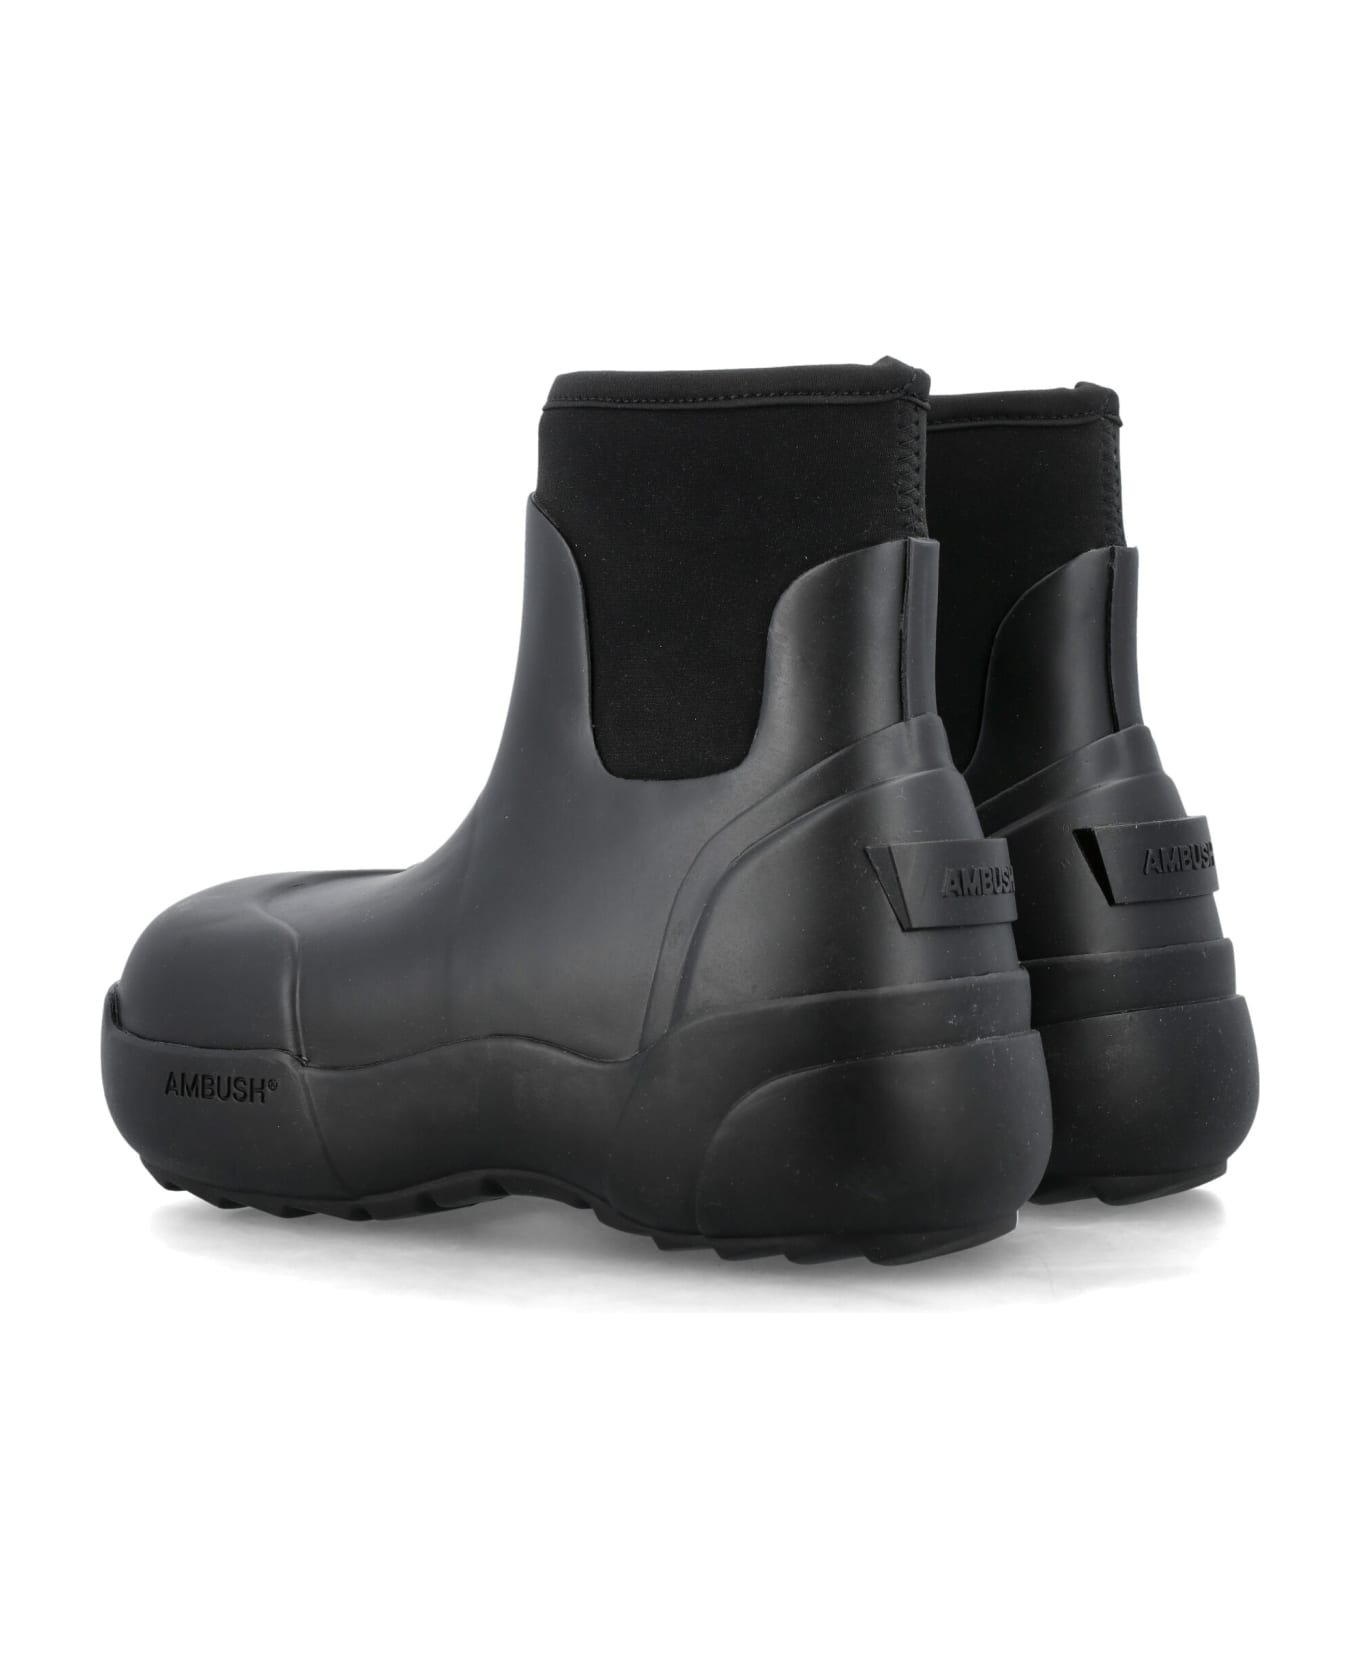 AMBUSH Rubber Boots - BLACK ブーツ